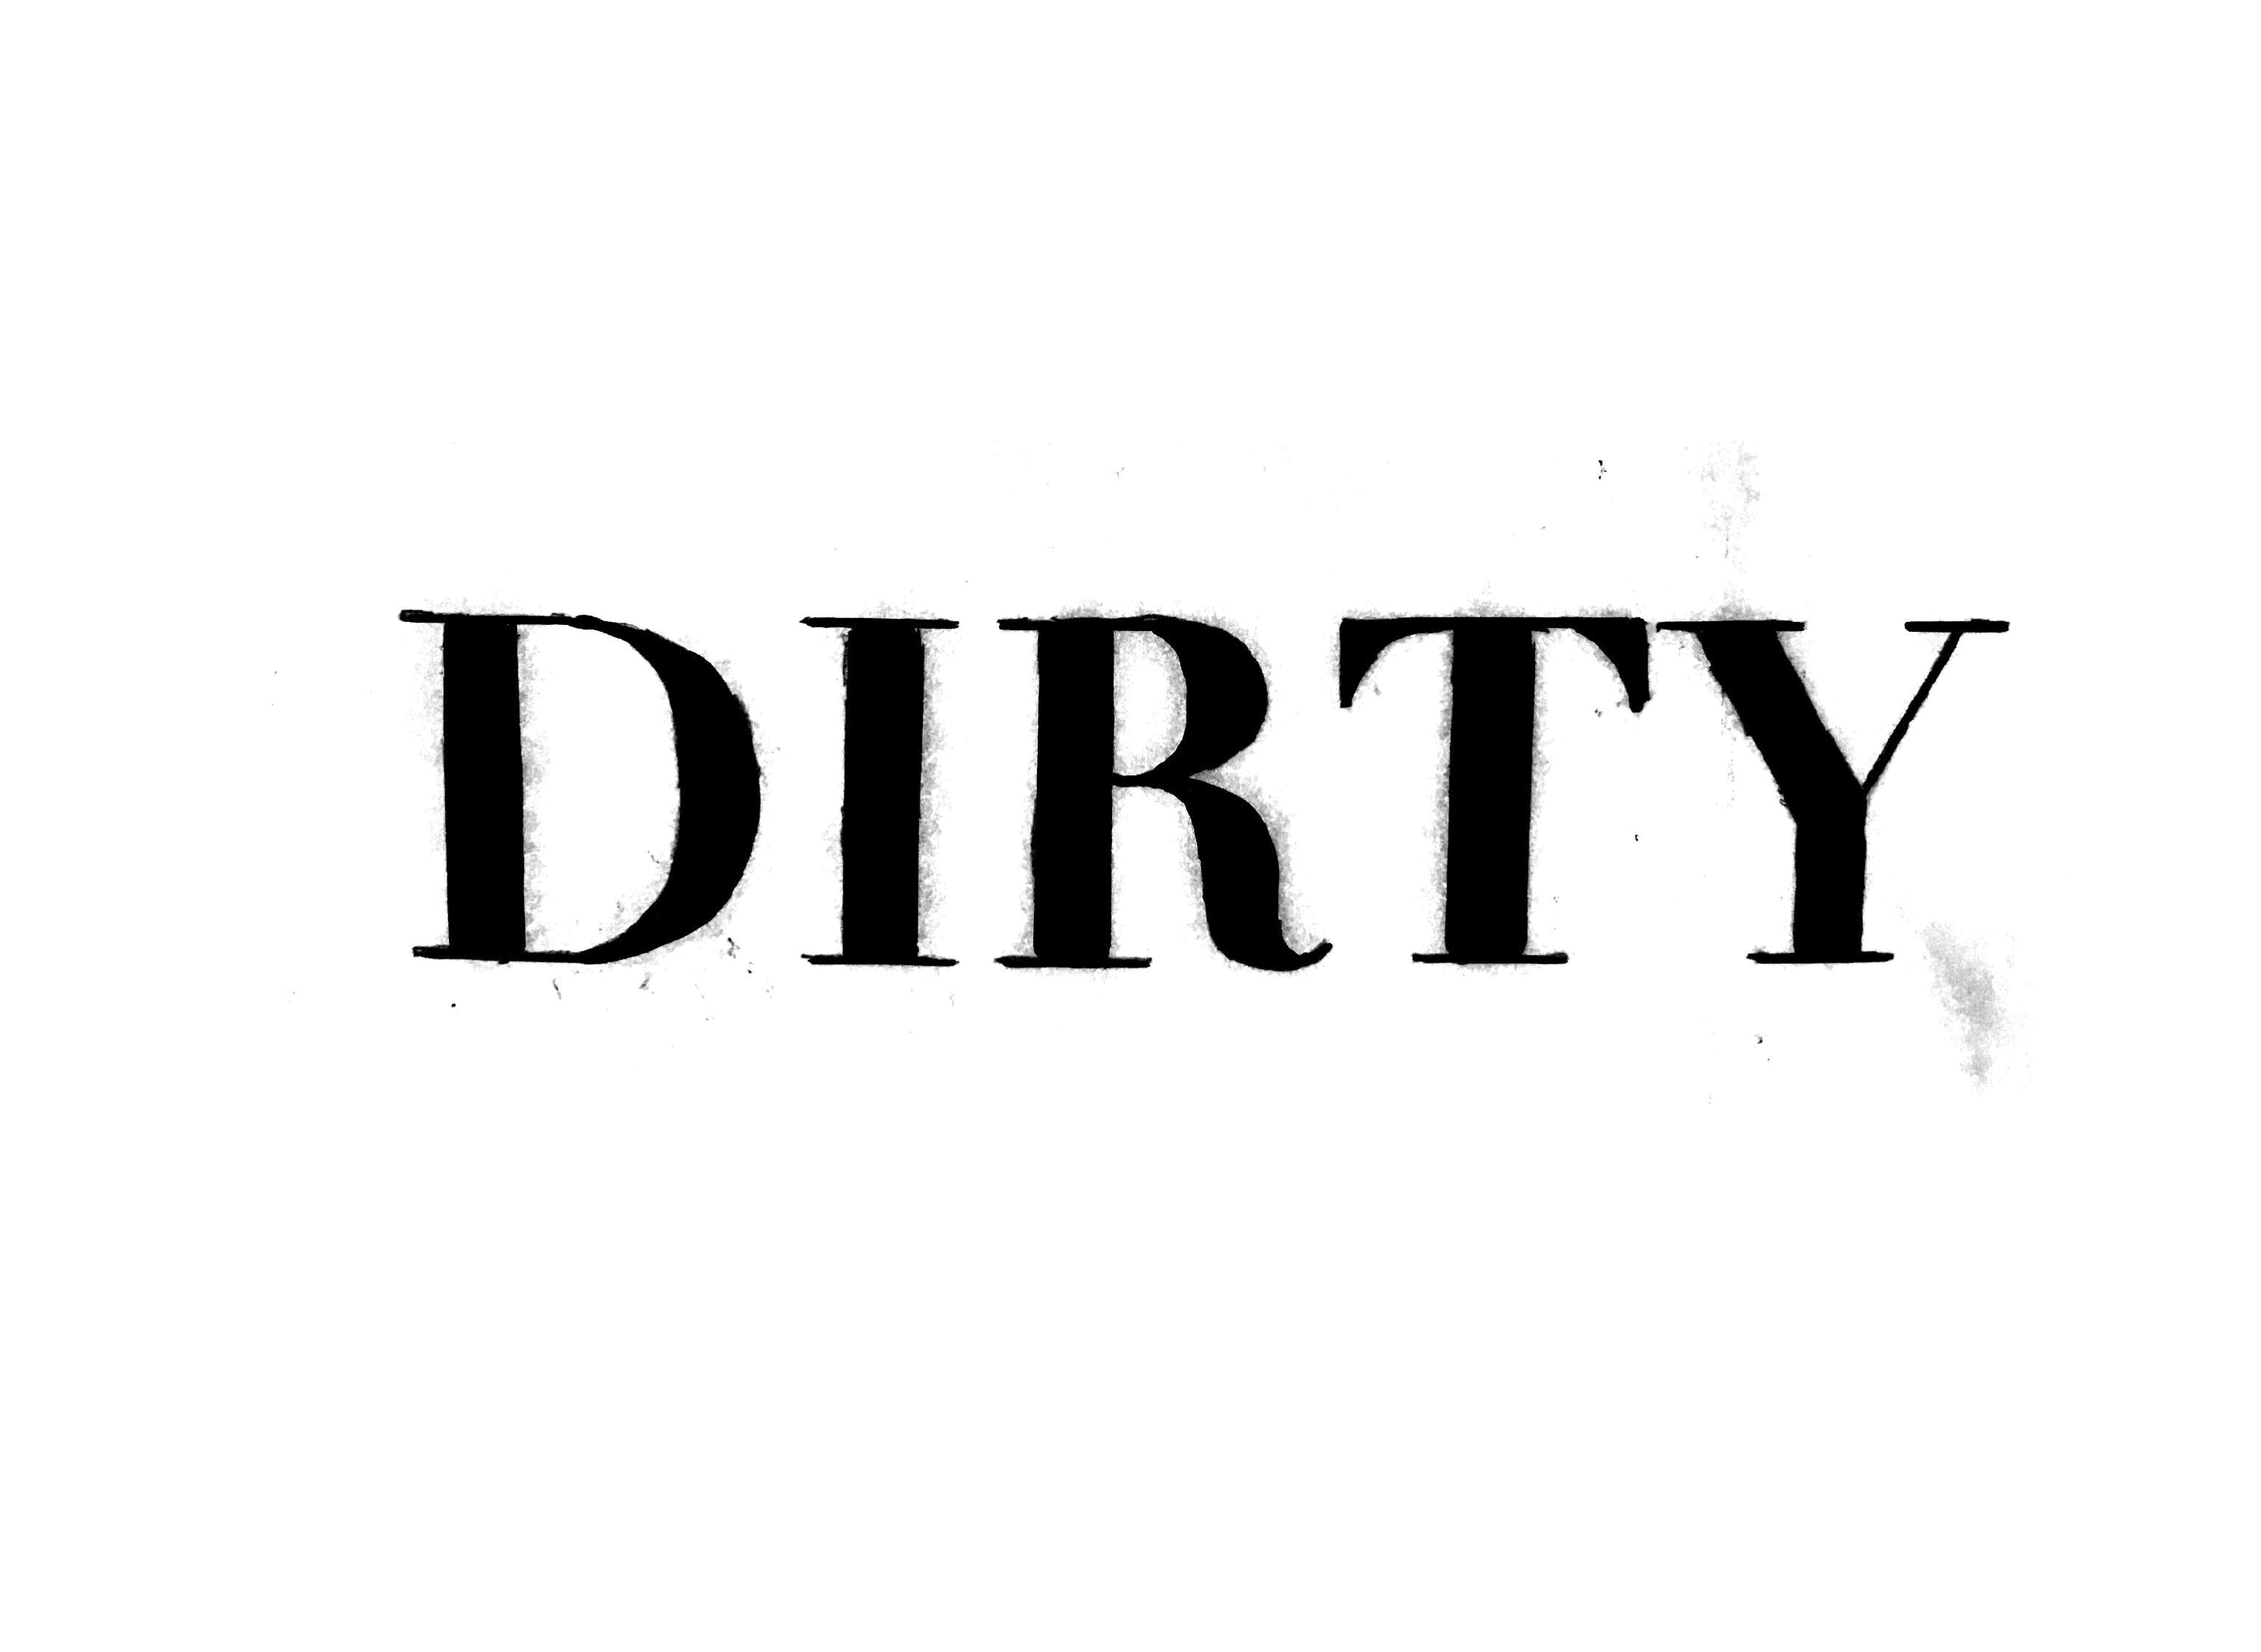 DIRTY_dirty